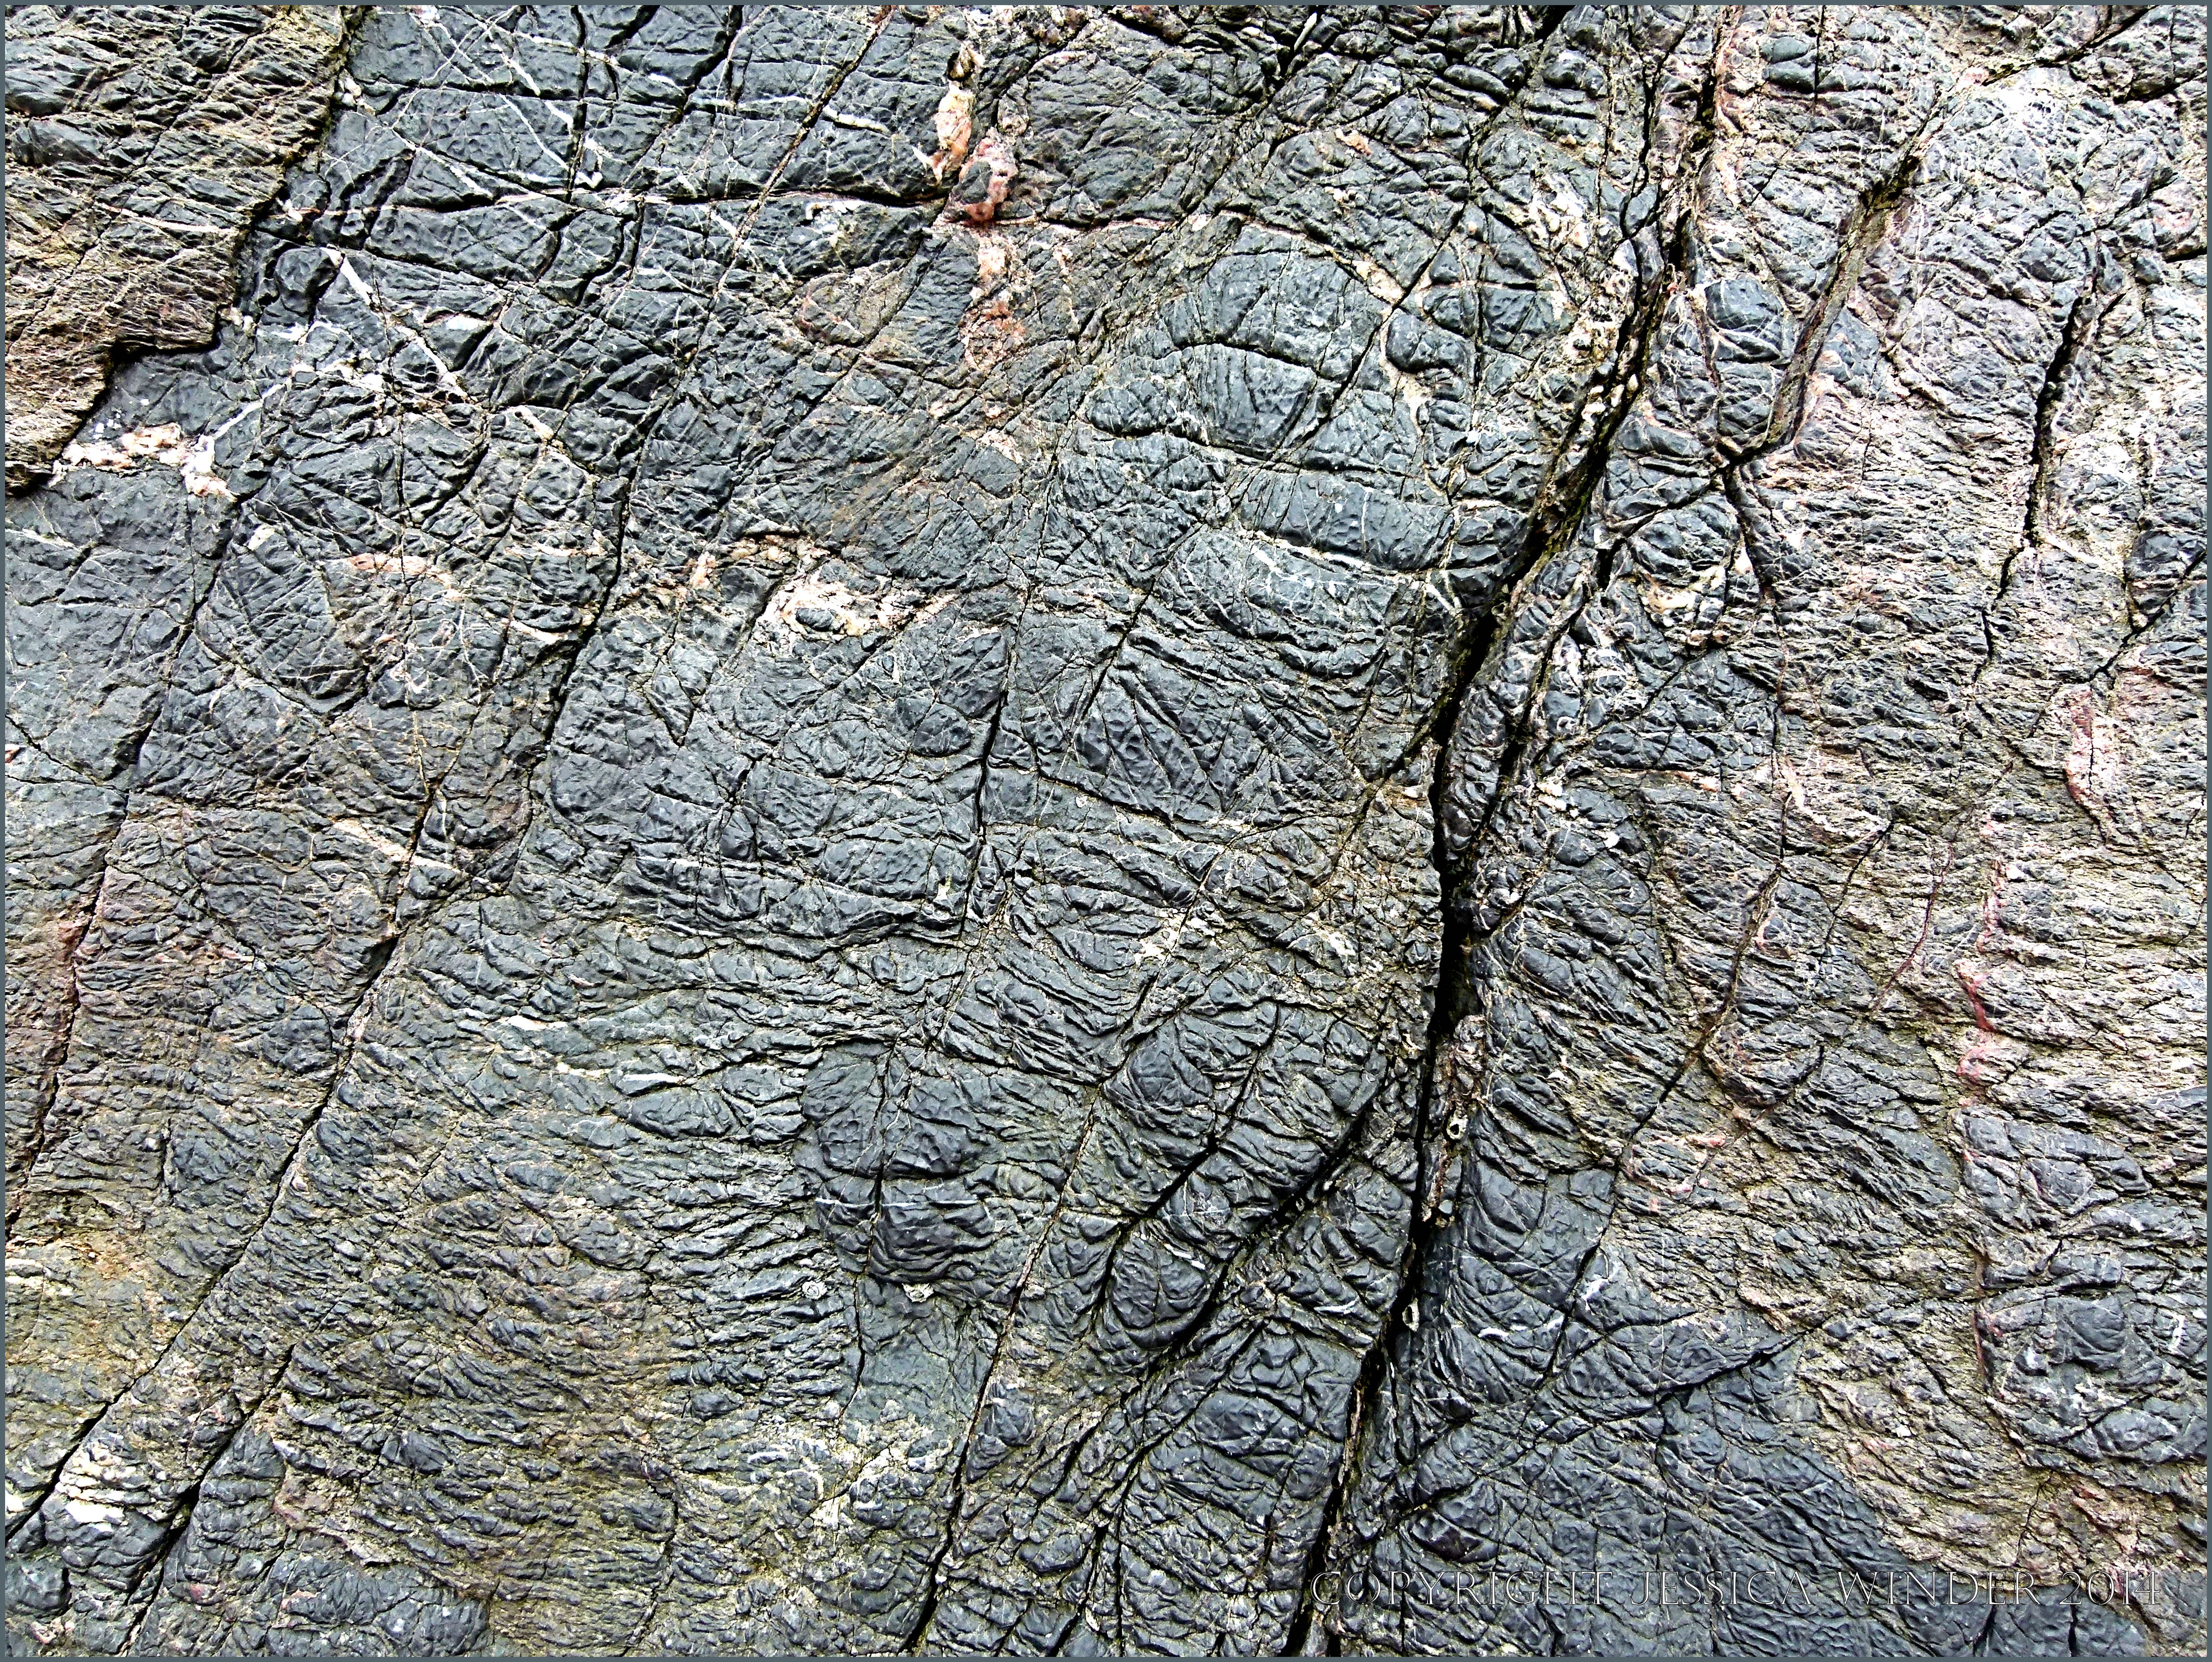 Tenby Rock Textures 24 – Jessica's Nature Blog